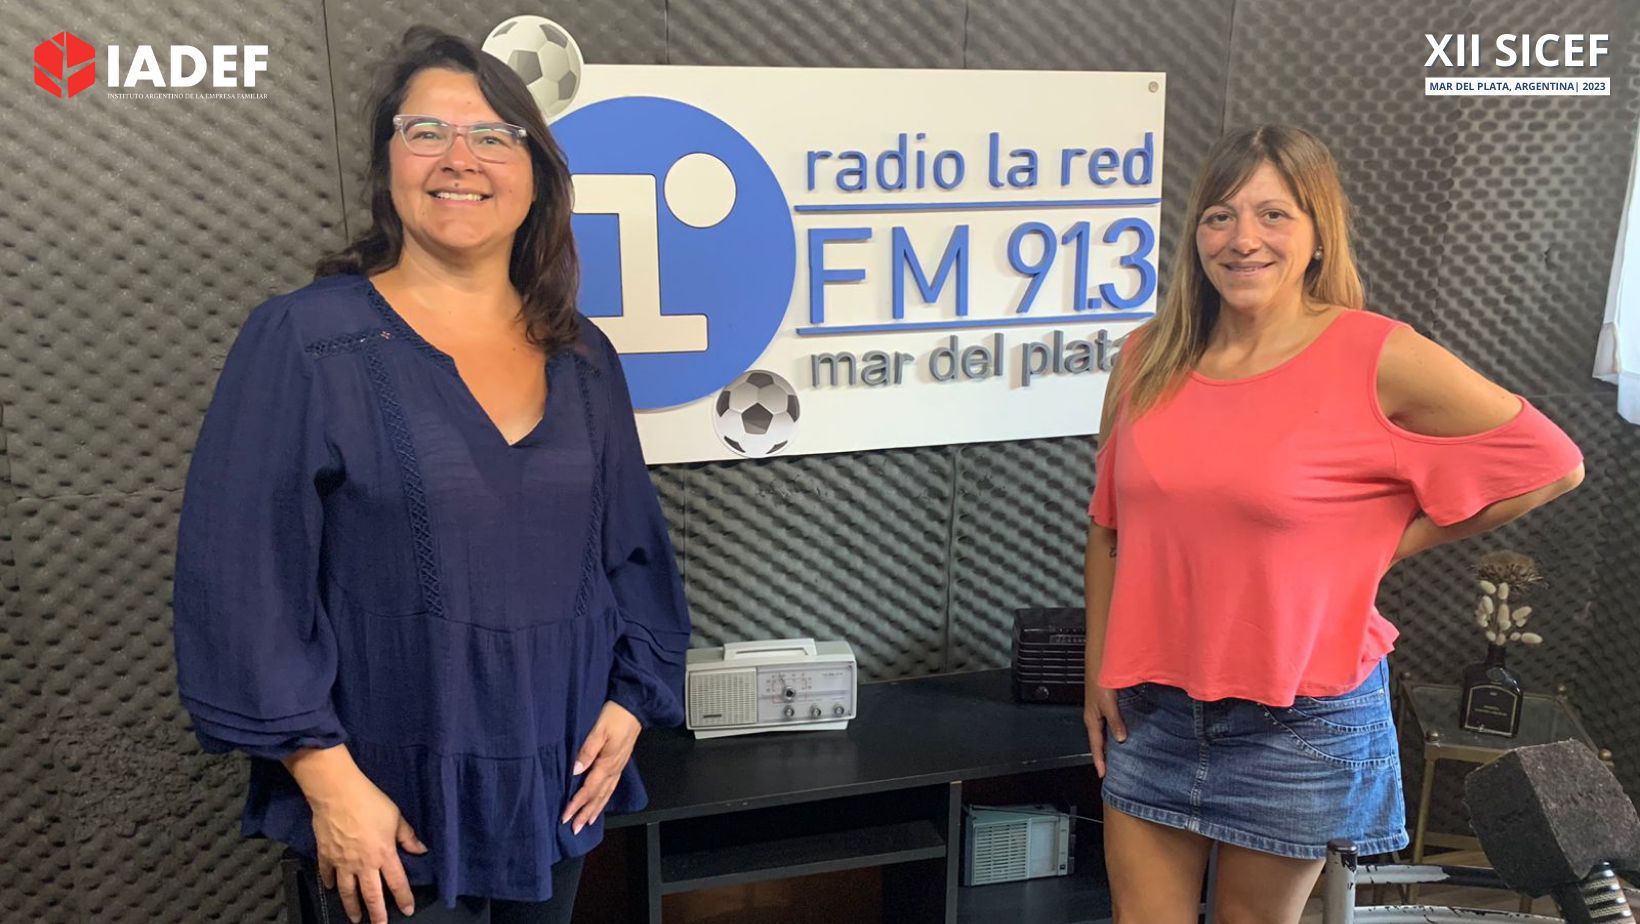 Entrevista a Natalia Christensen en Radio La Red Mar del Plata